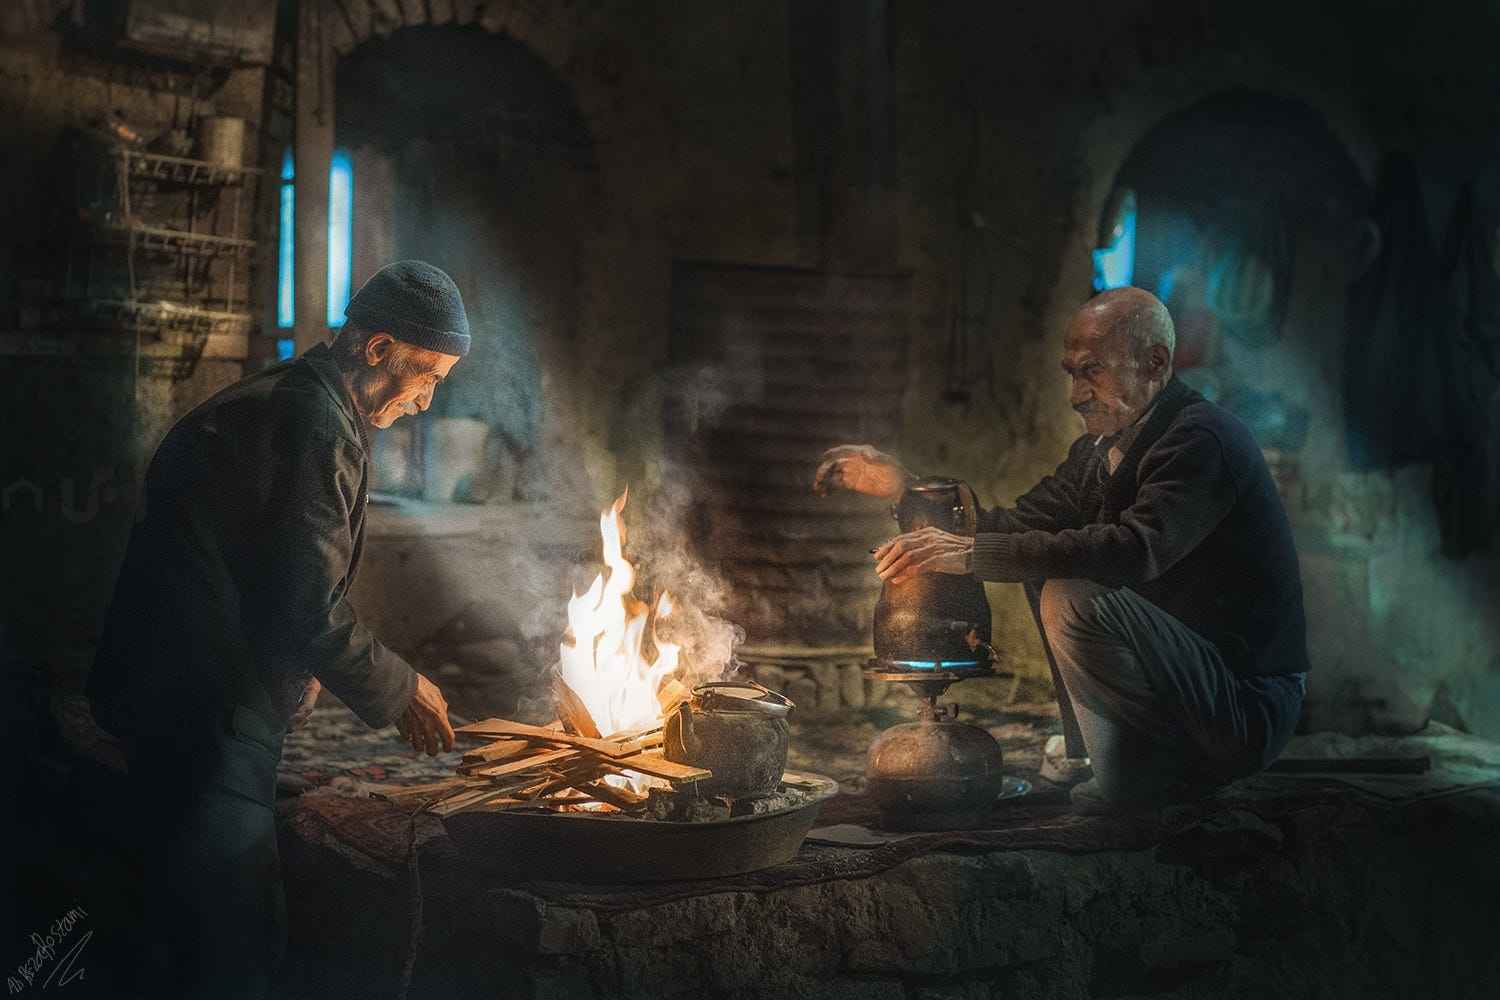 Iranian old peoples - شطرنج رفاه - وزارت تعاون،کار و رفاه اجتماعی, رفاه اجتماعی, رفاه, تامین اجتماعی, ایران